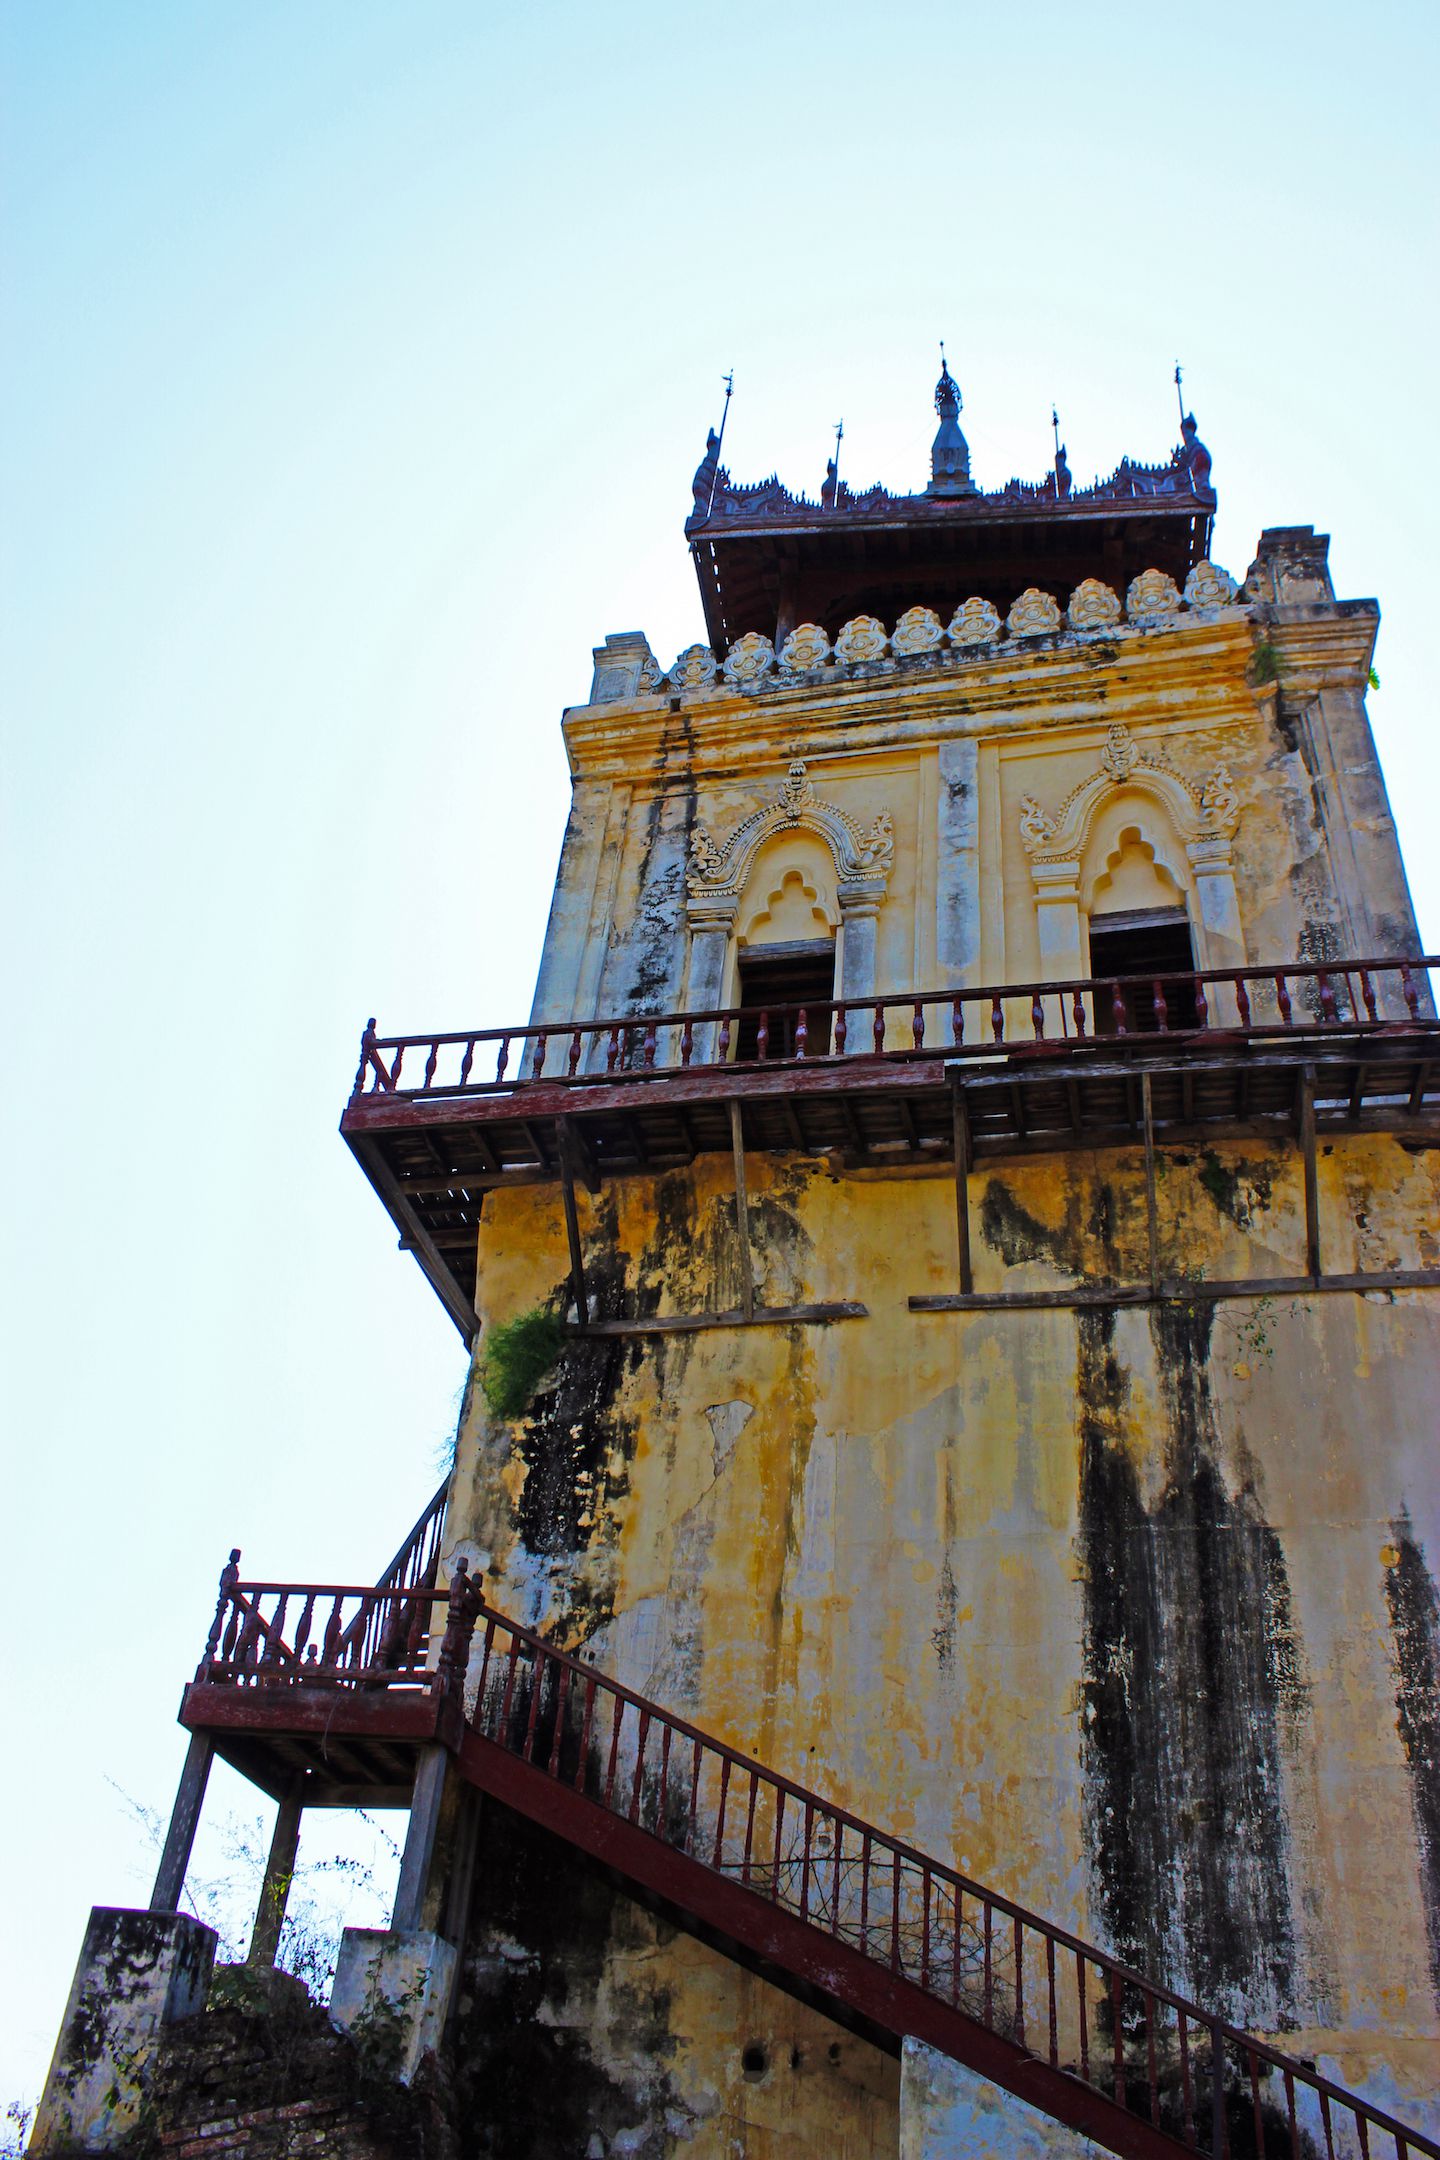 Watch tower, Inwa, Myanmar